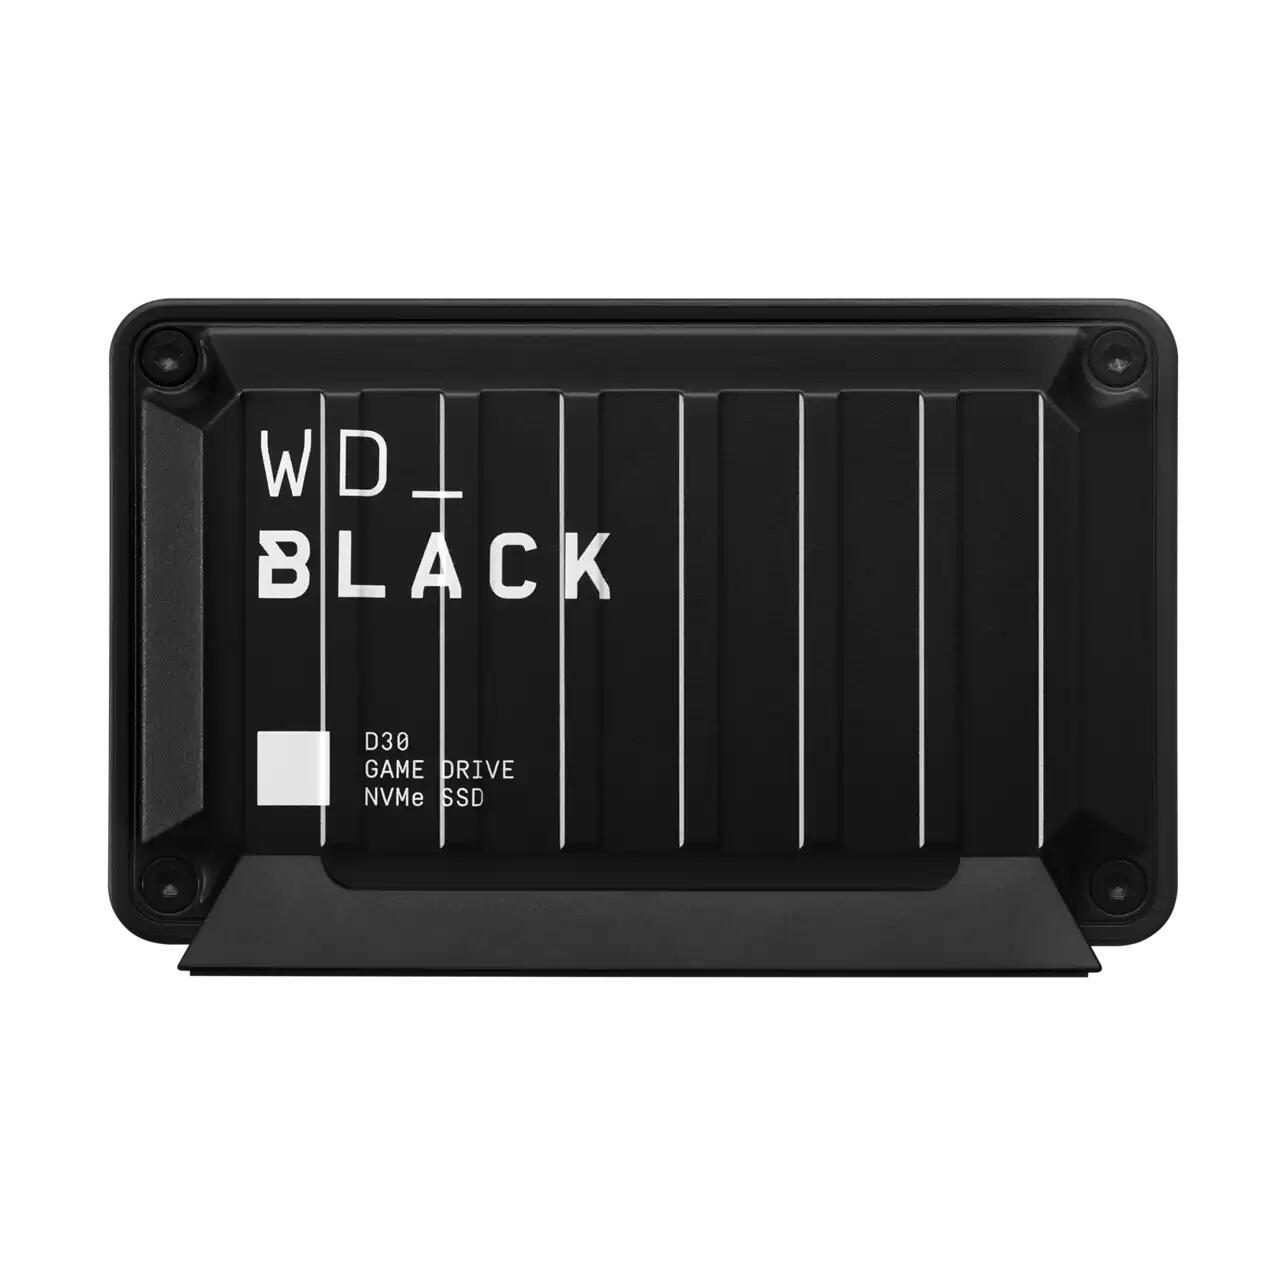 WD_BLACK™ D30 Game Drive SSD - 1 TB von Western Digital